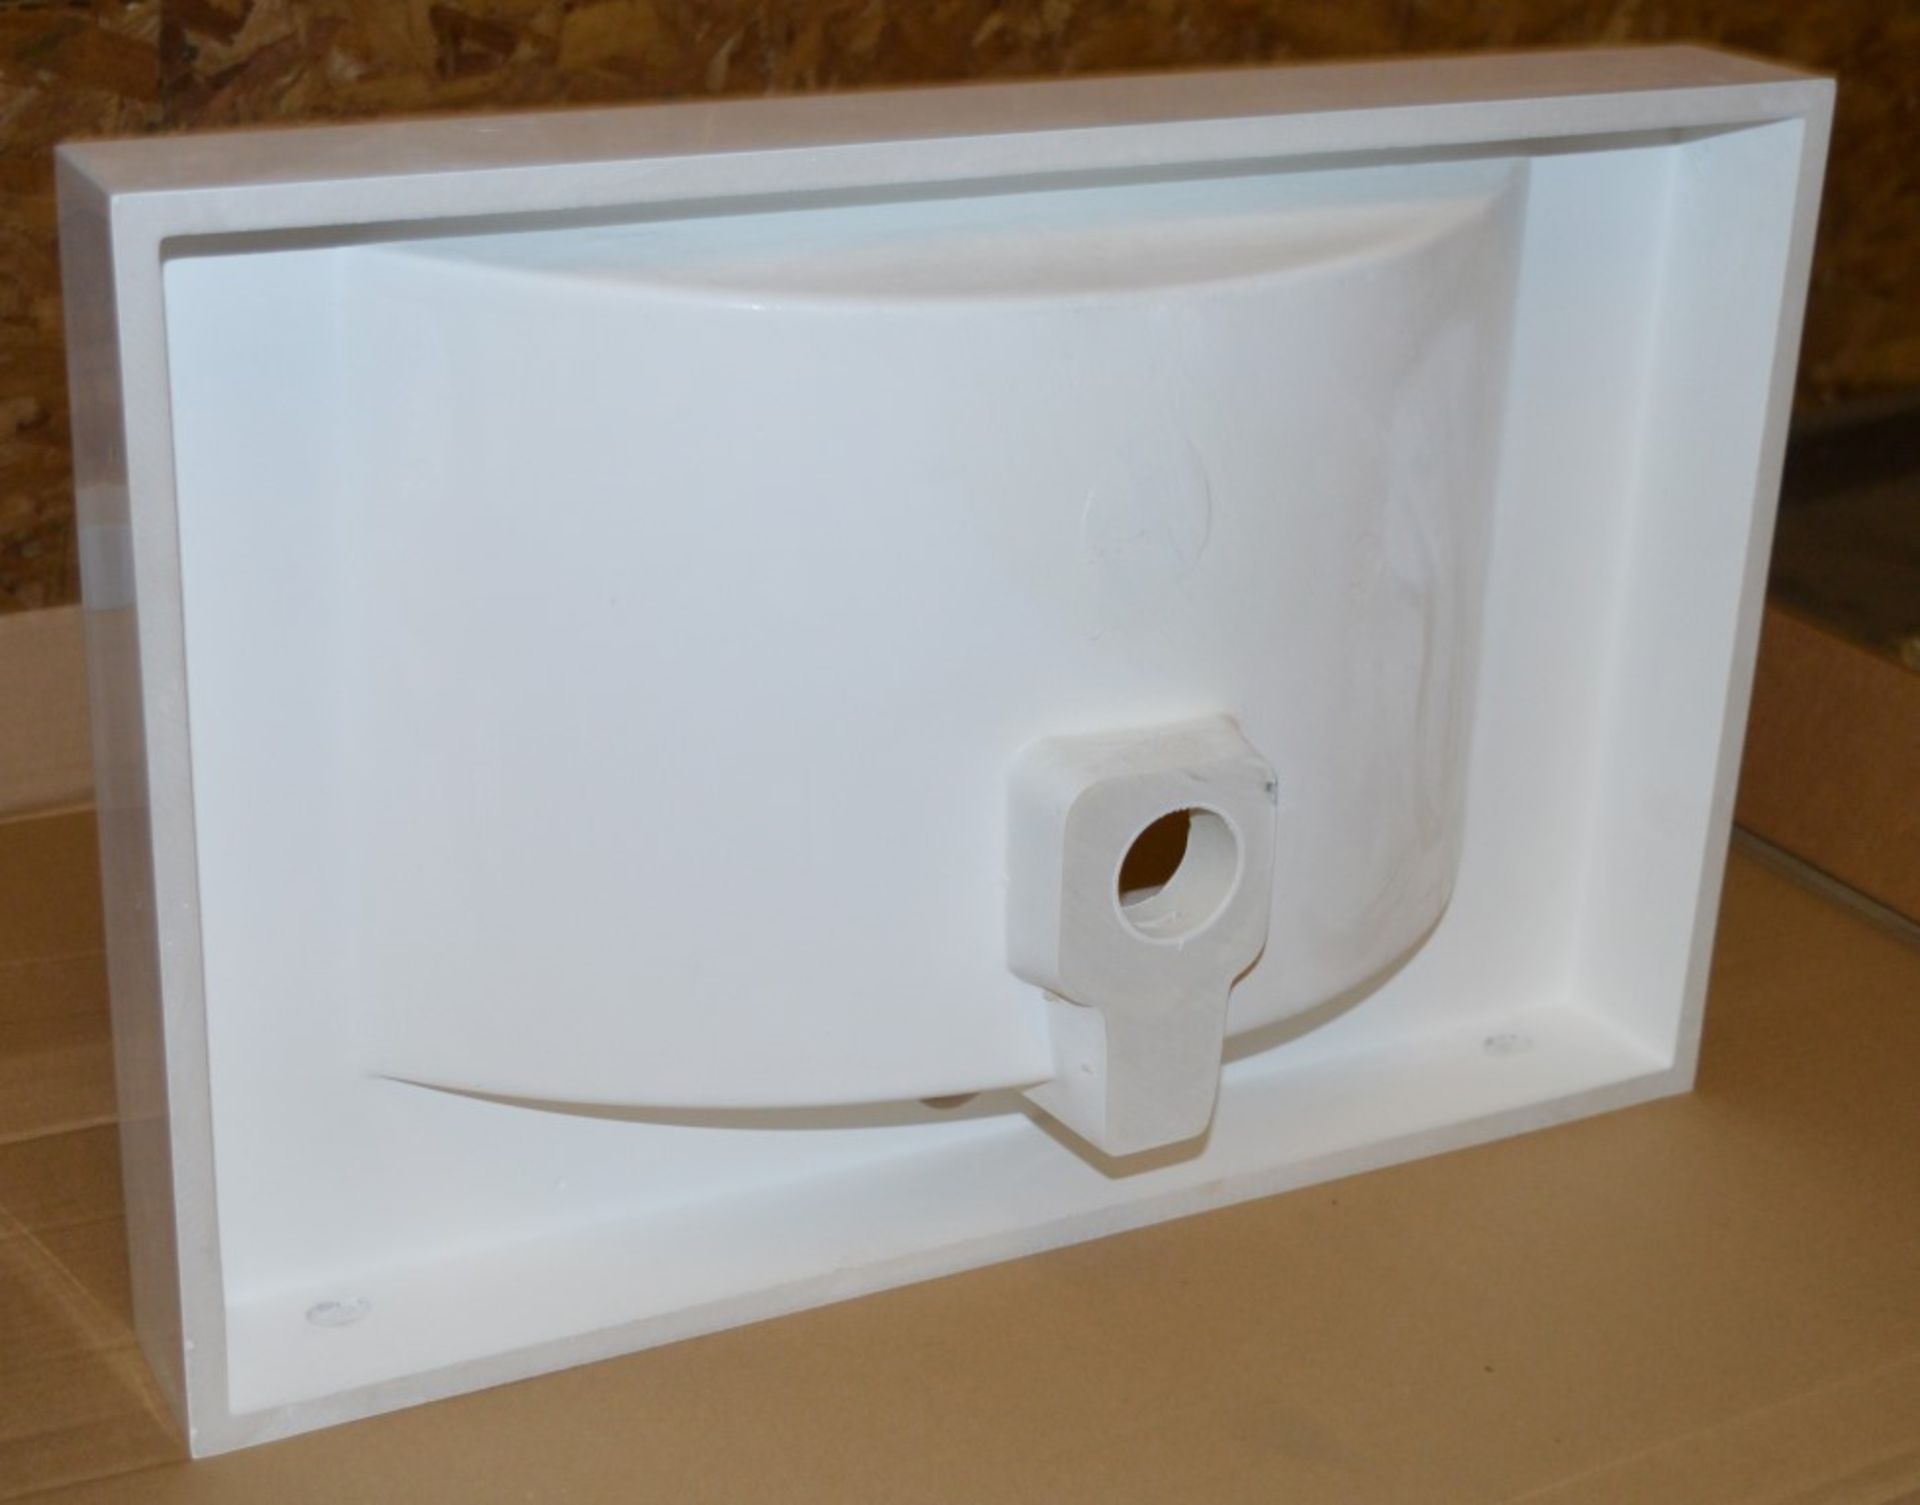 10 x Vogue Bathrooms JUNO Single Tap Hole Inset Sink Basins - 600mm Width - Product Code 1VFJU60 - - Image 6 of 7